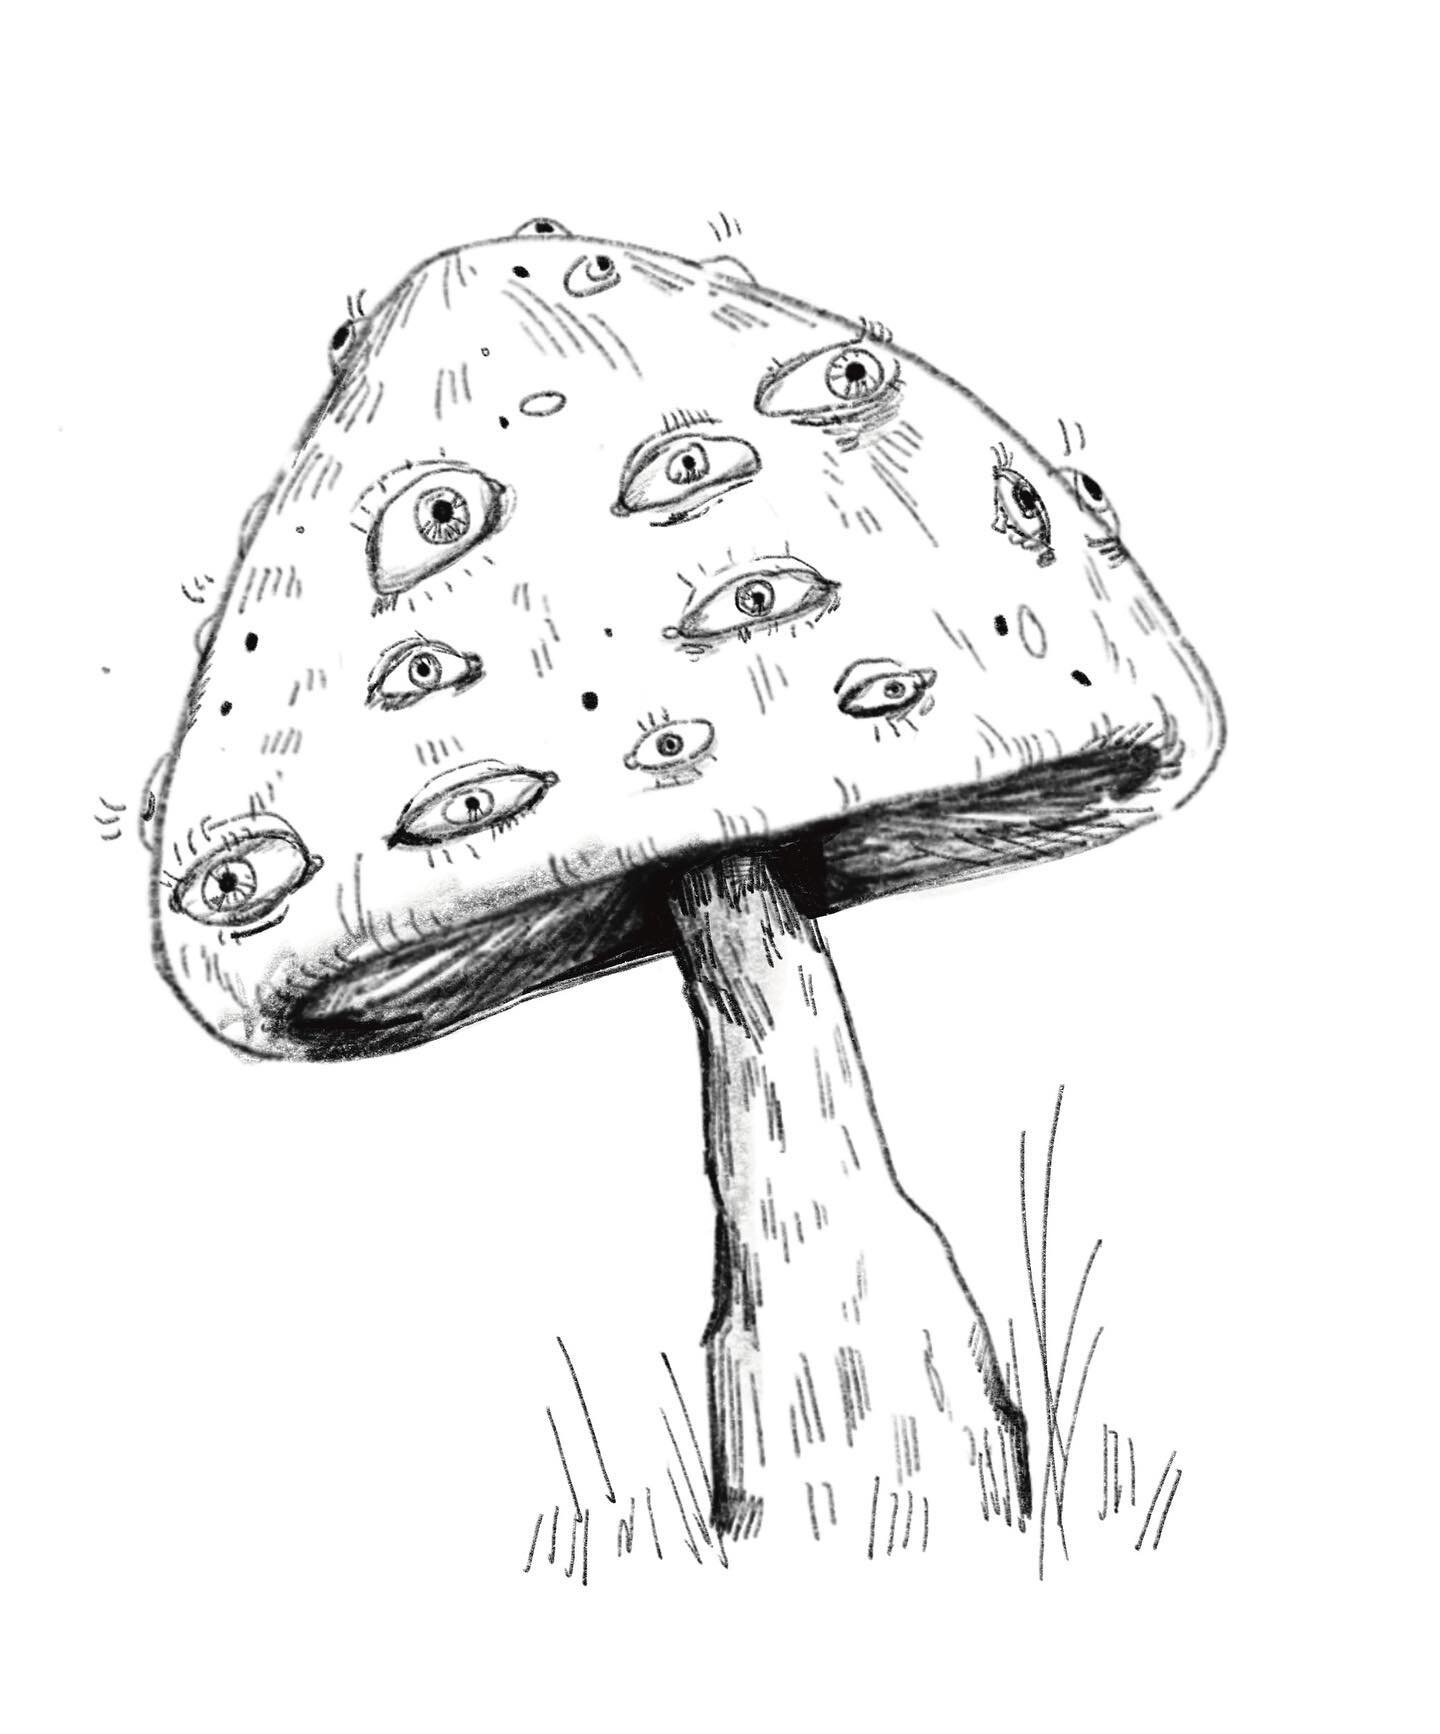 I'm a fungi 

#illustration #doodle #fungi #mushrooms #sketchbook